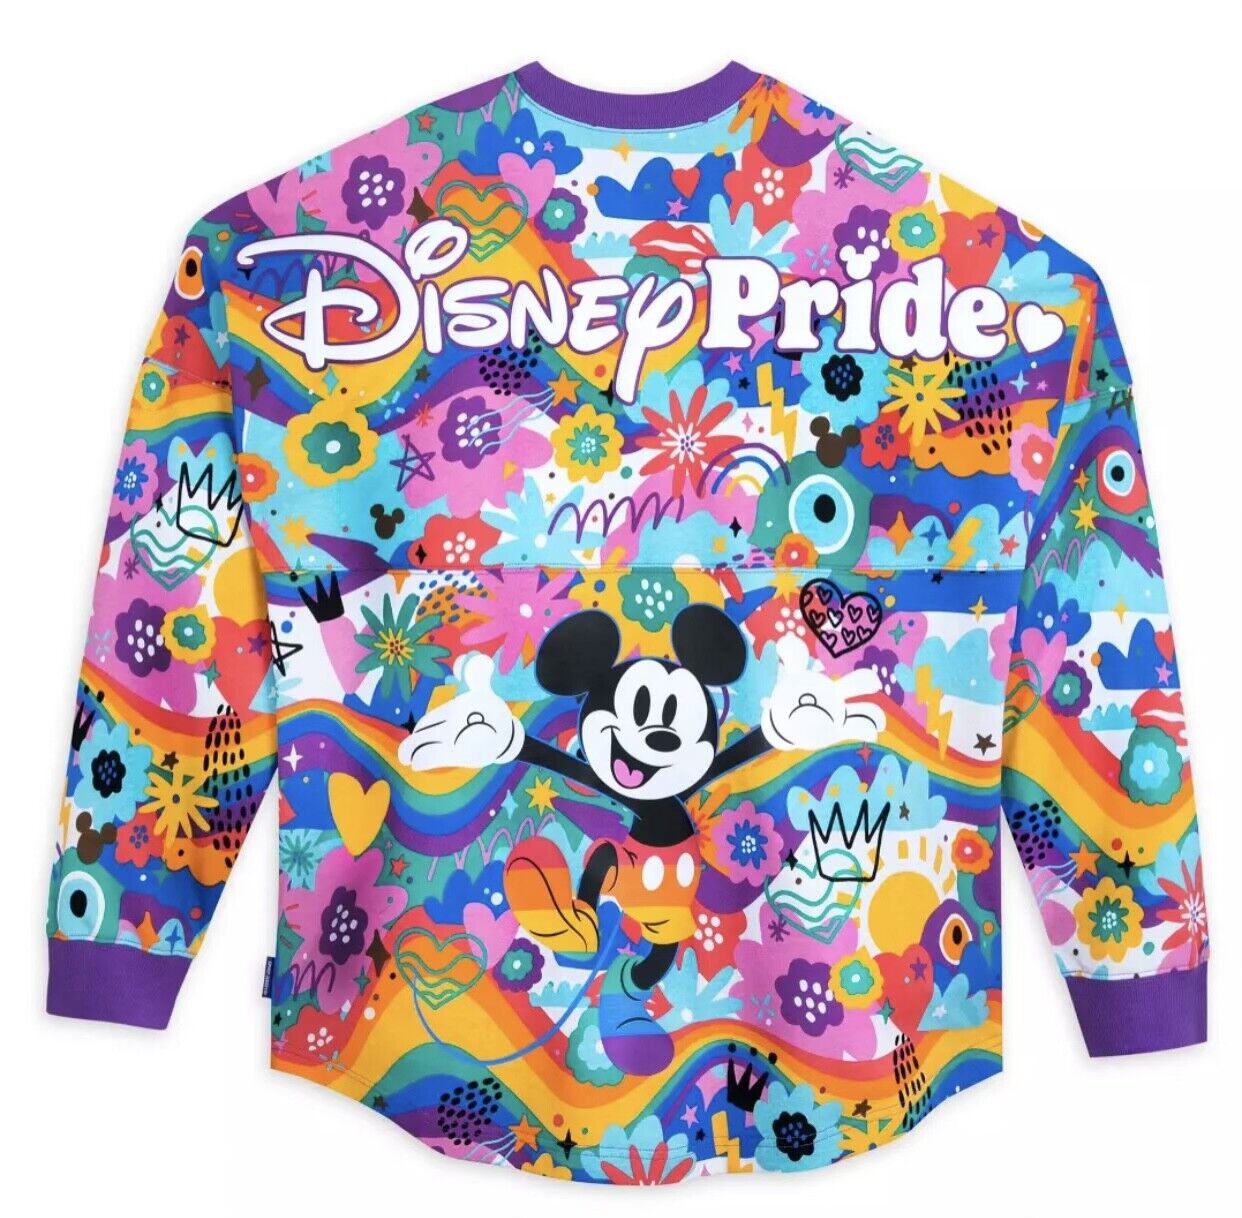 NWT Disney Pride Mickey Mouse Spirit Jersey